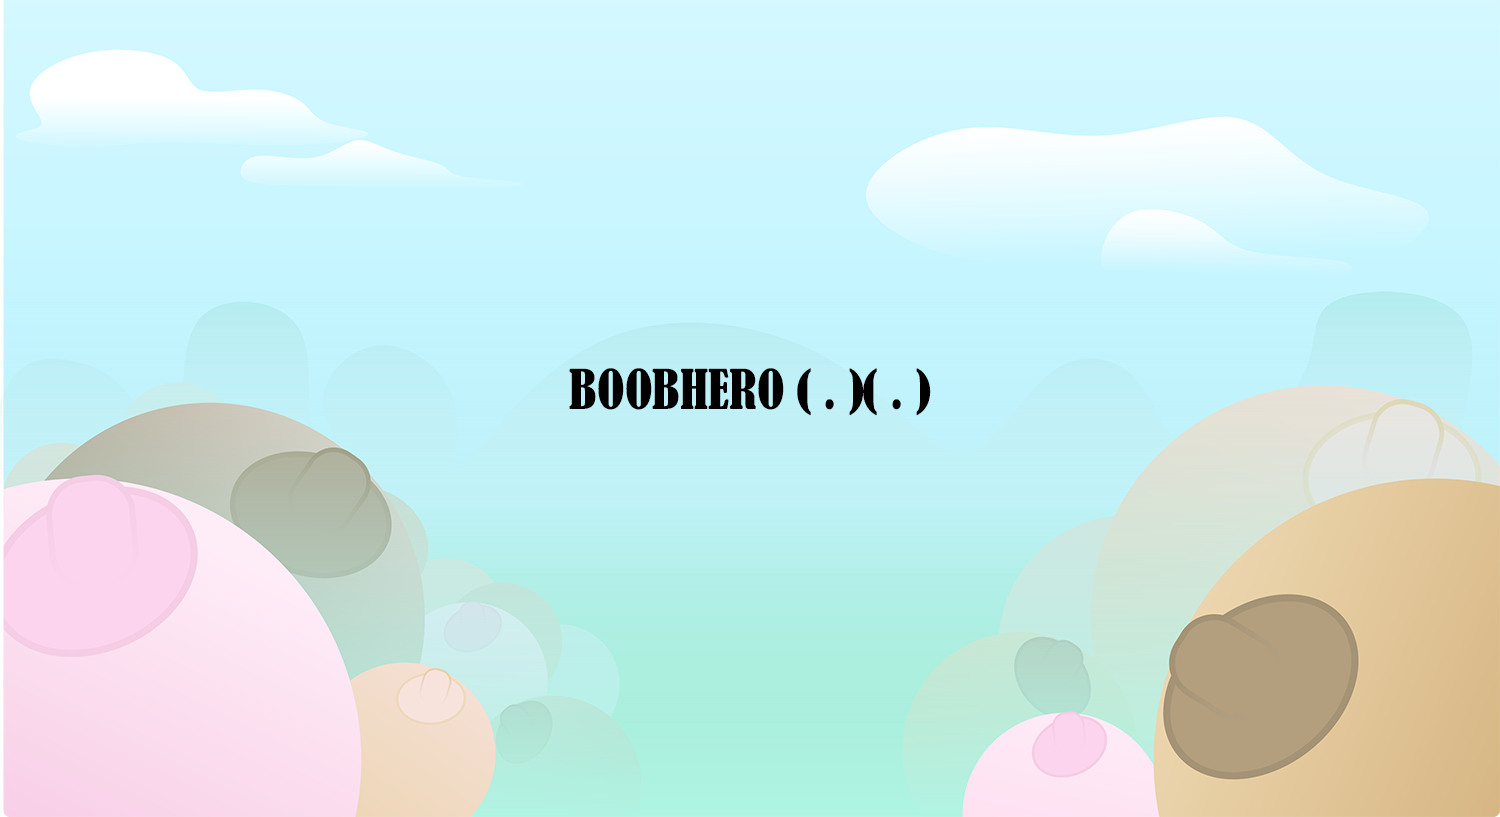 BooBHero - Boobjam2020